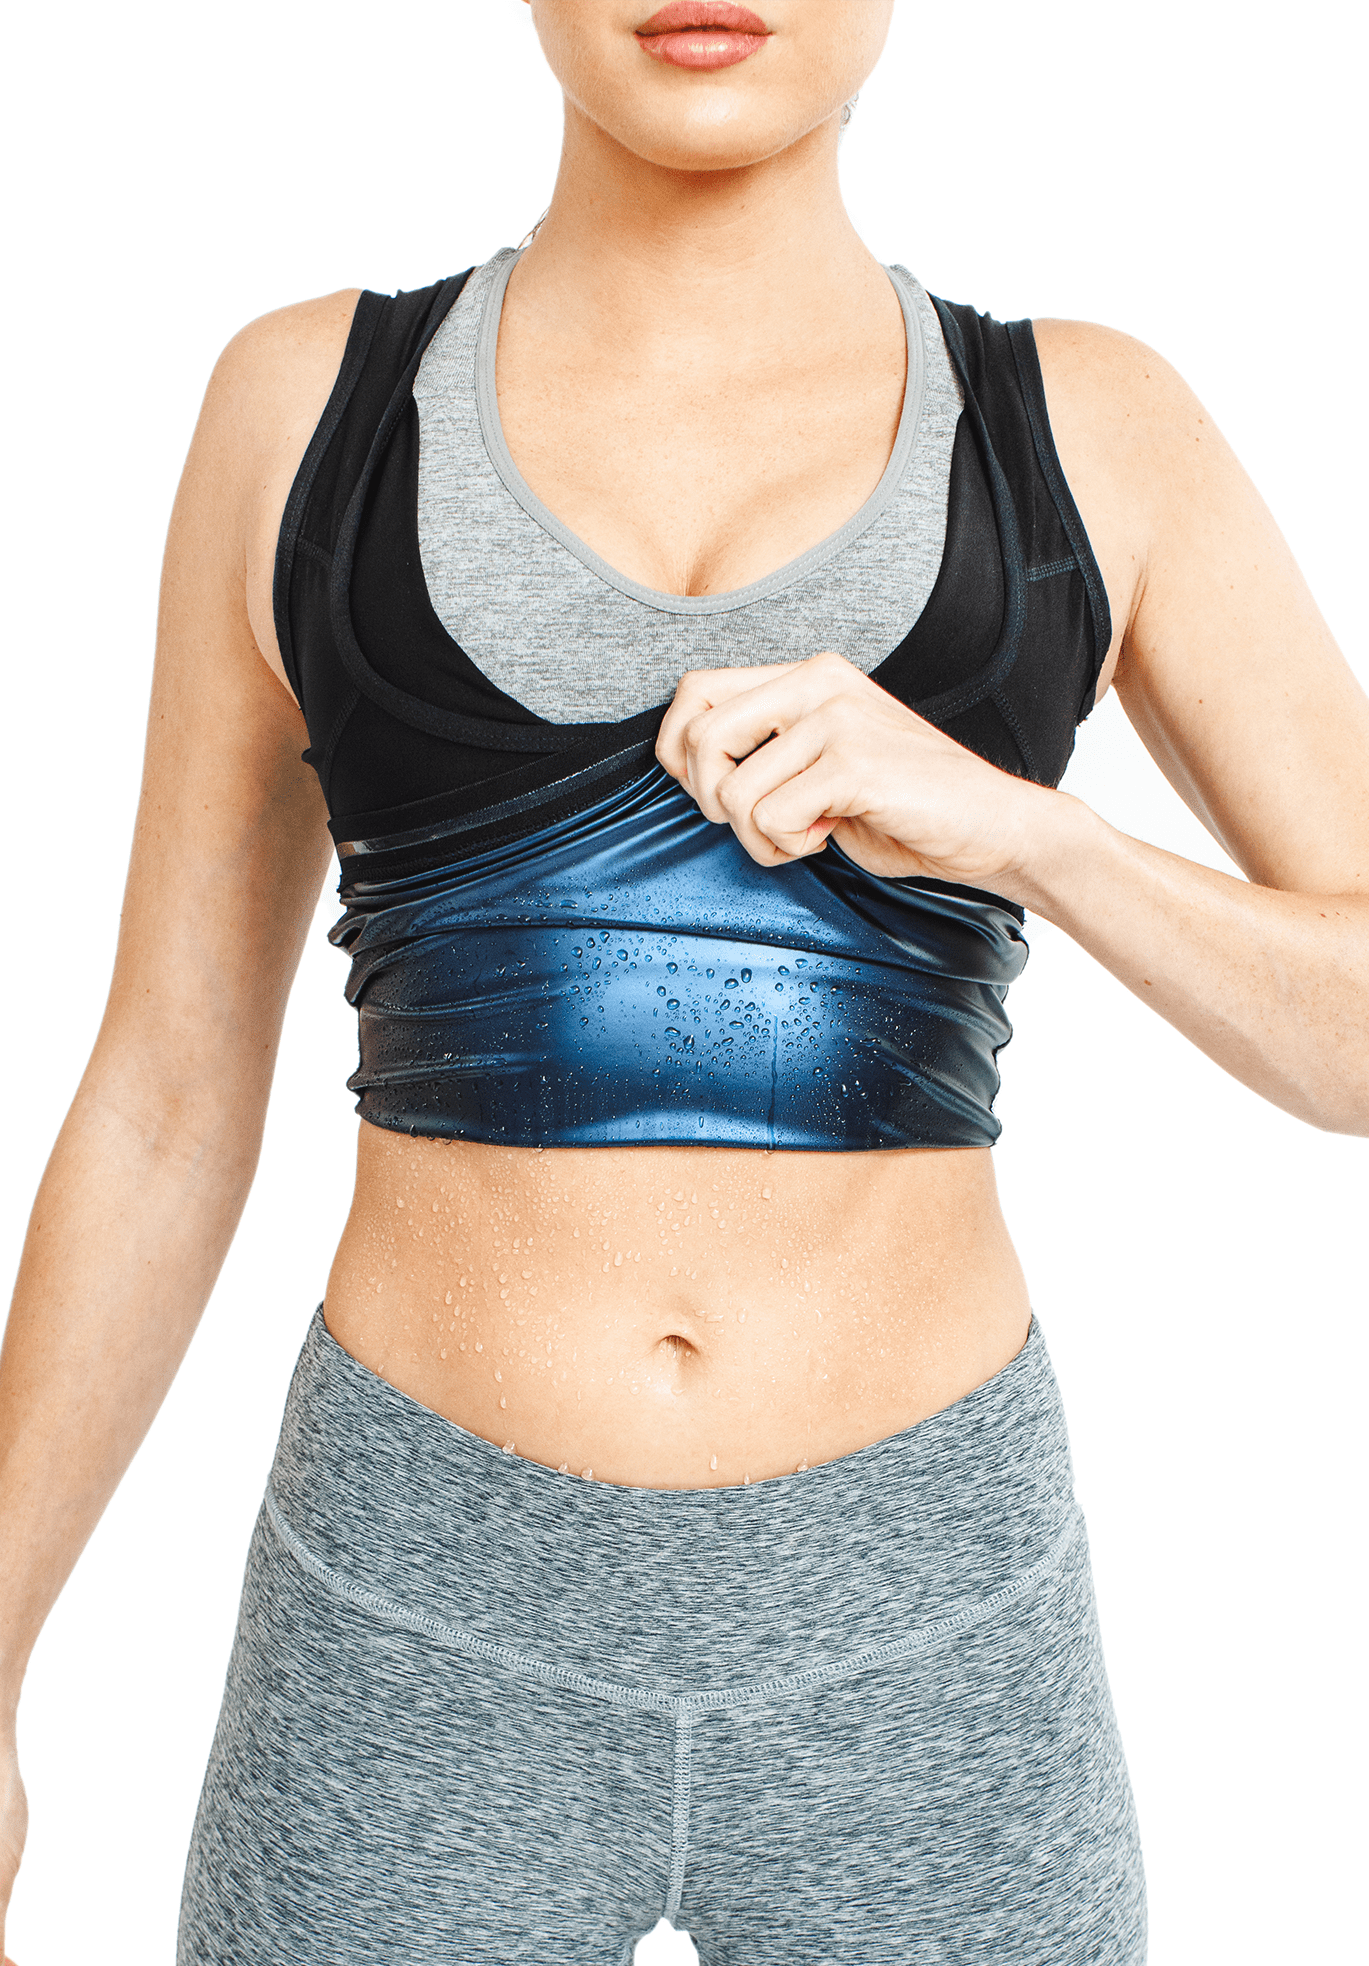 HOMETA Sweat Vest for Women Waist Trainer Vest for Women Slimming Polymer Sauna Vest Tank Top for Weight Loss Body Shaper Shirts